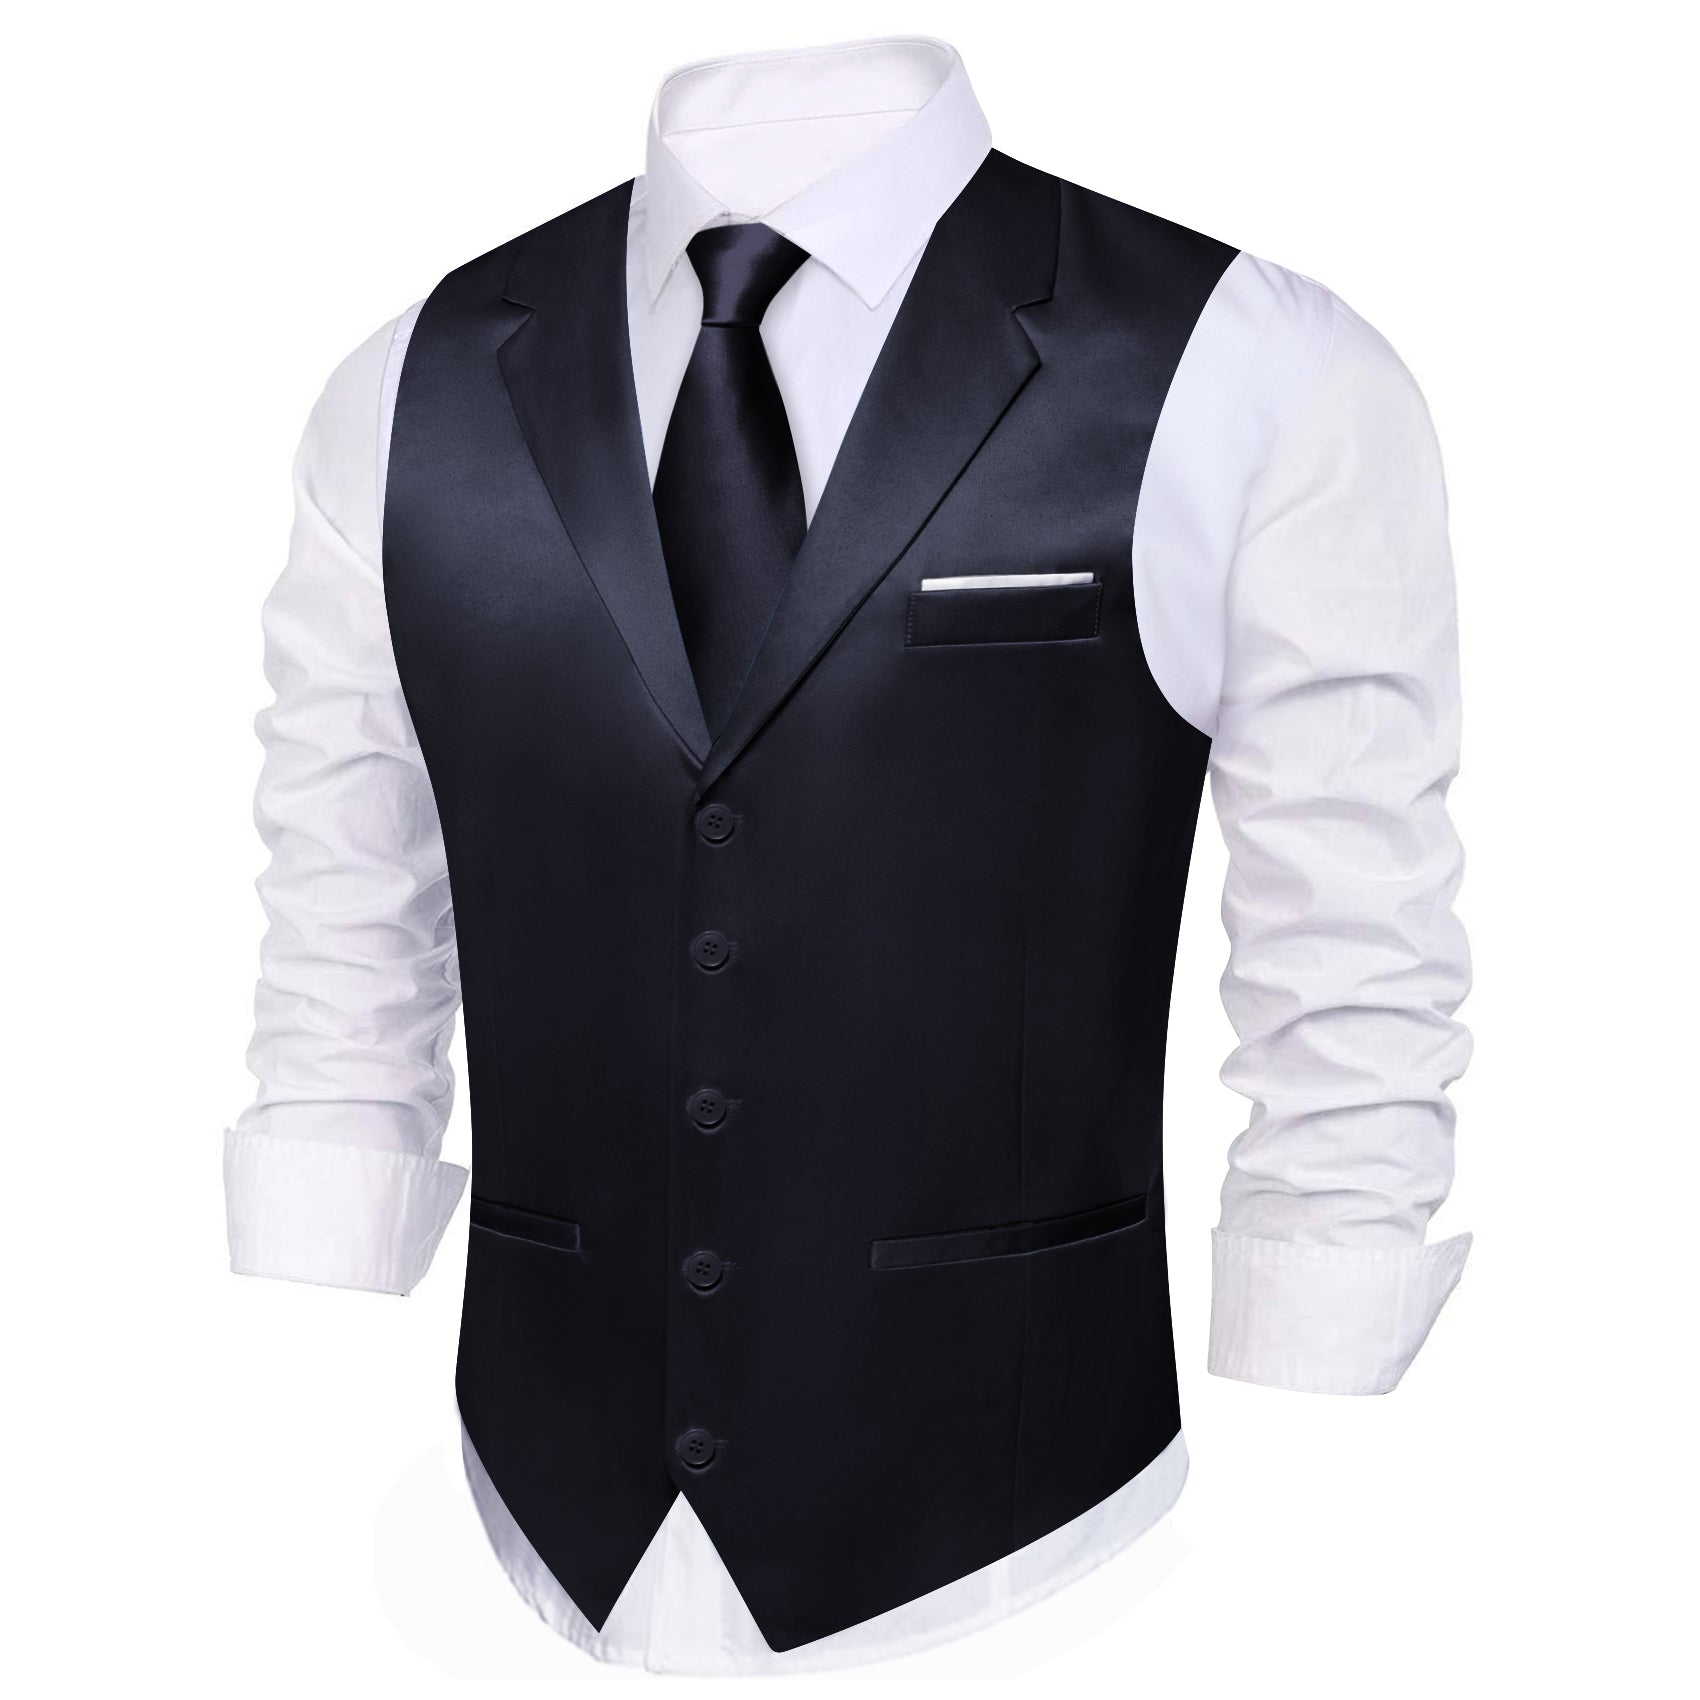 Barry.wang Black Solid Vest Waistcoat Set